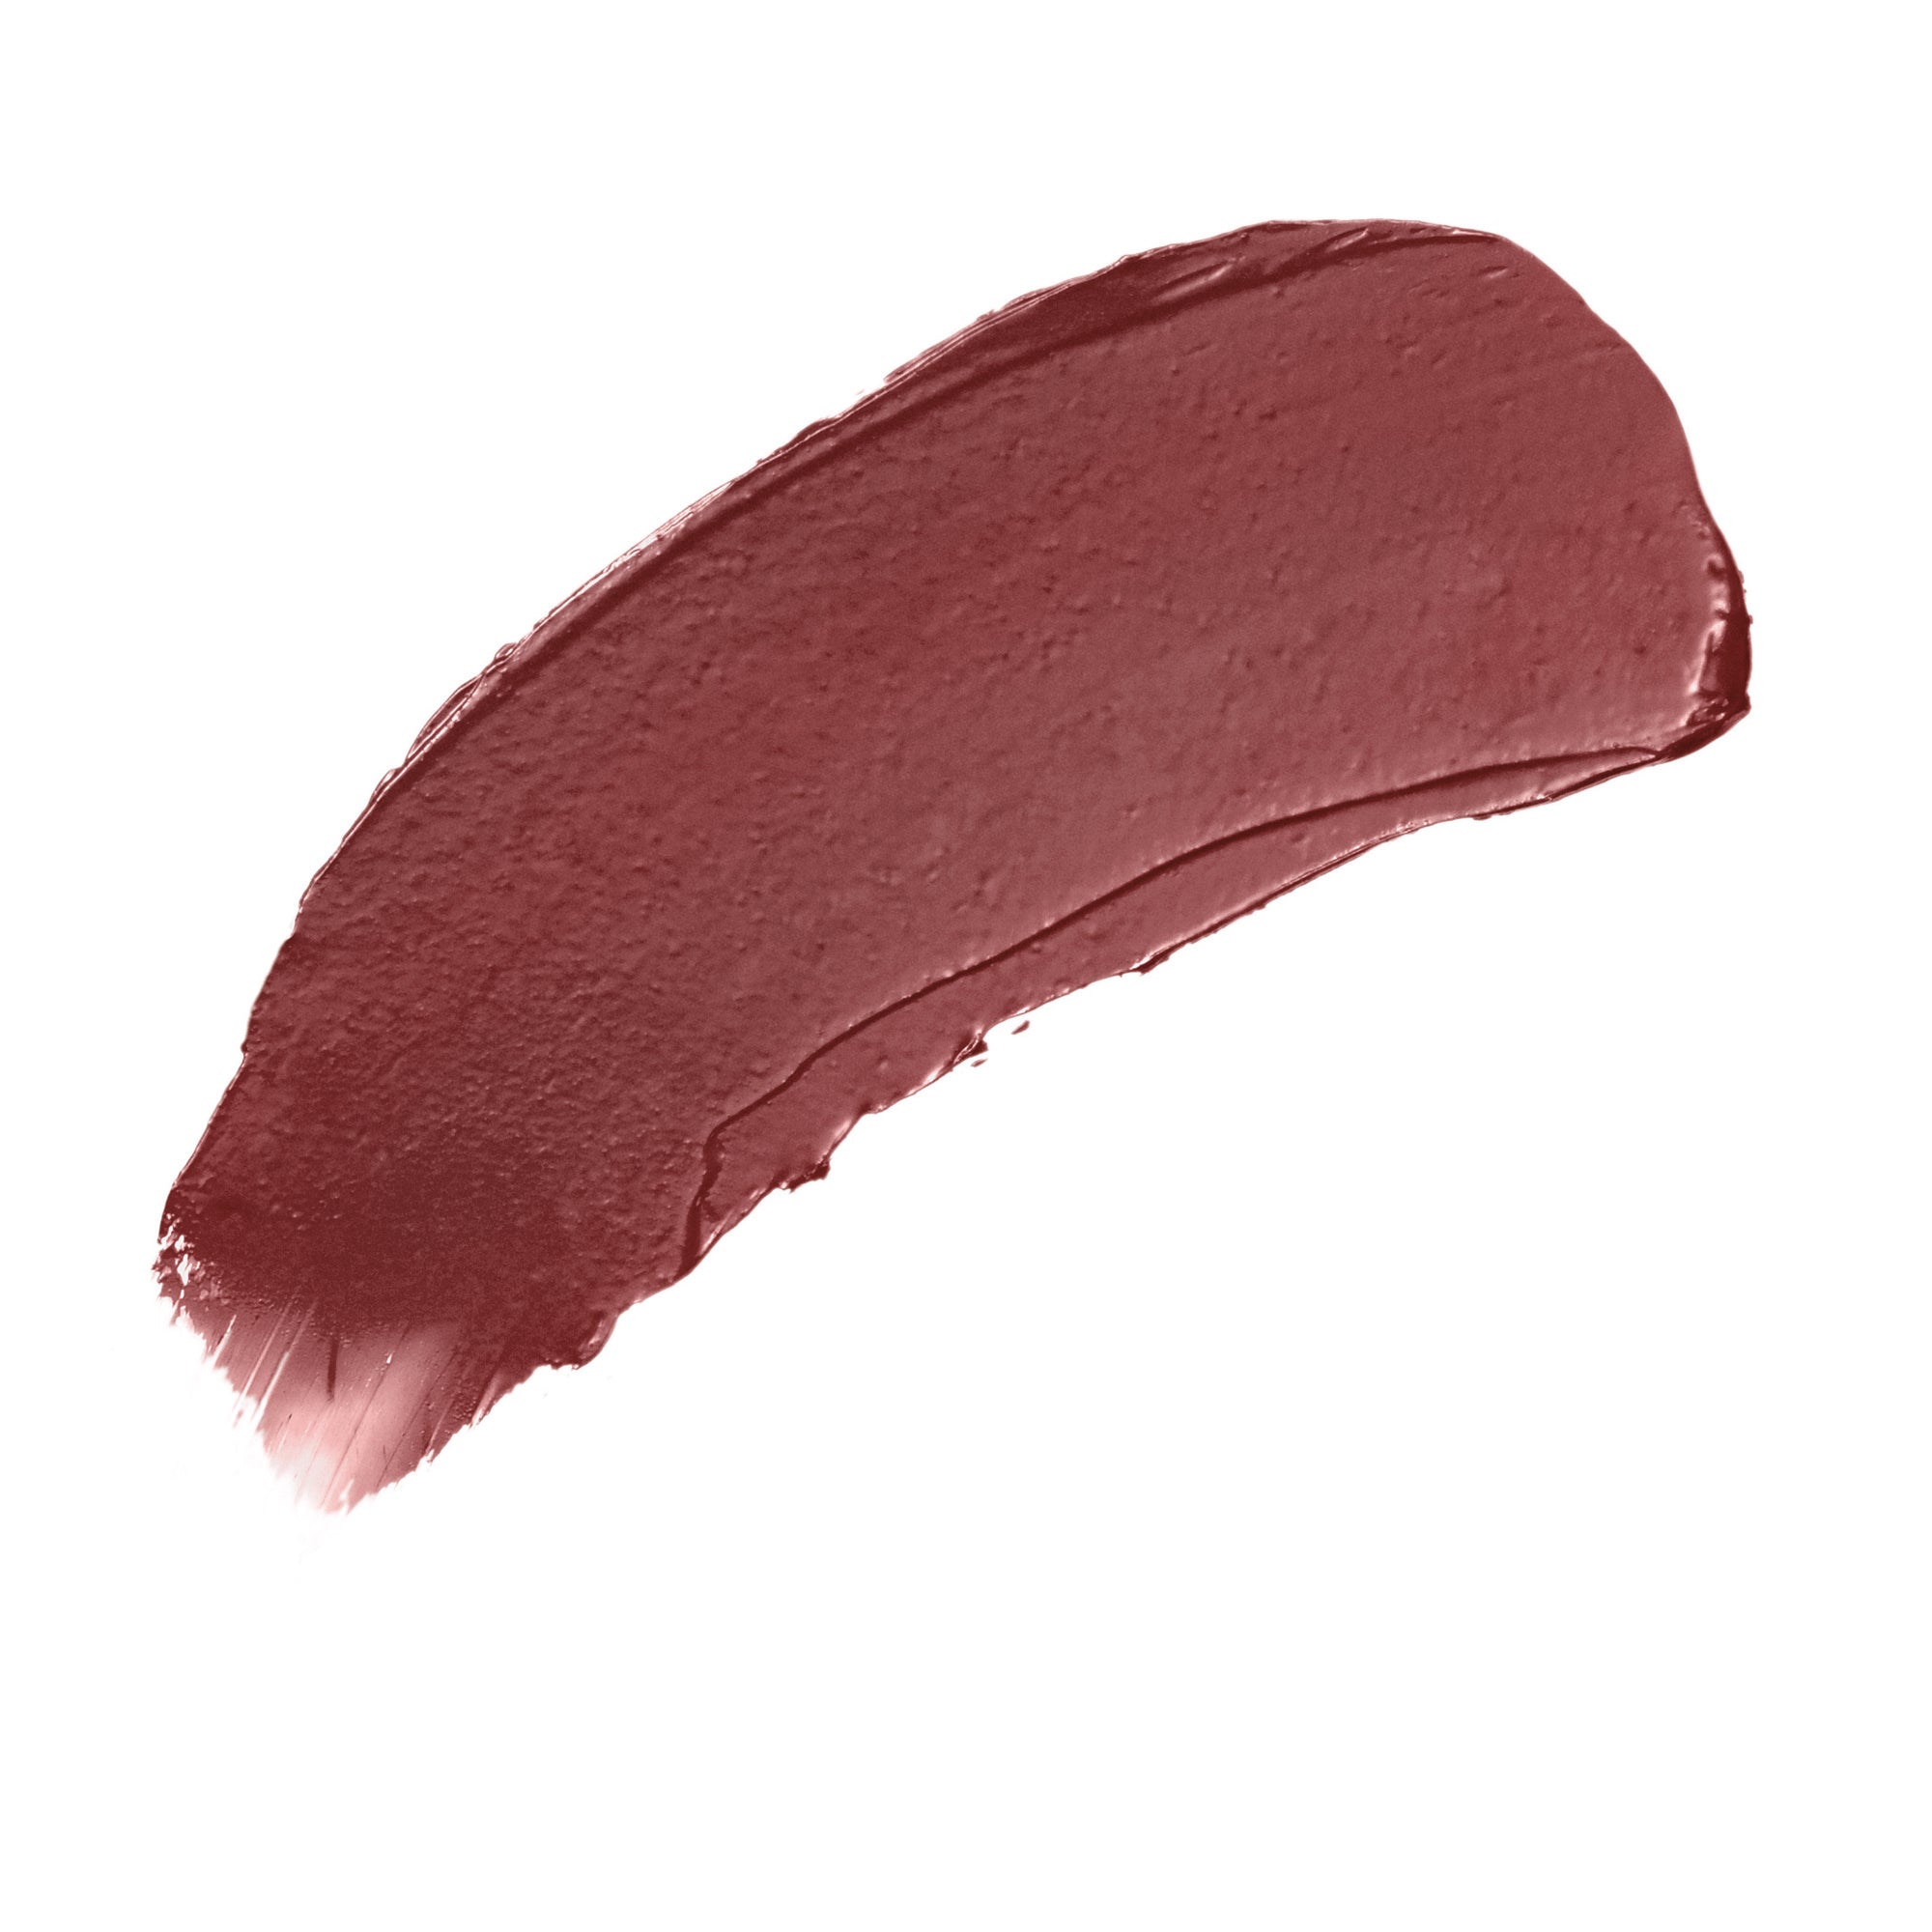 Jane Iredale Triple Luxe Long Lasting Naturally Moist Lipstick / JAMIE / Swatch